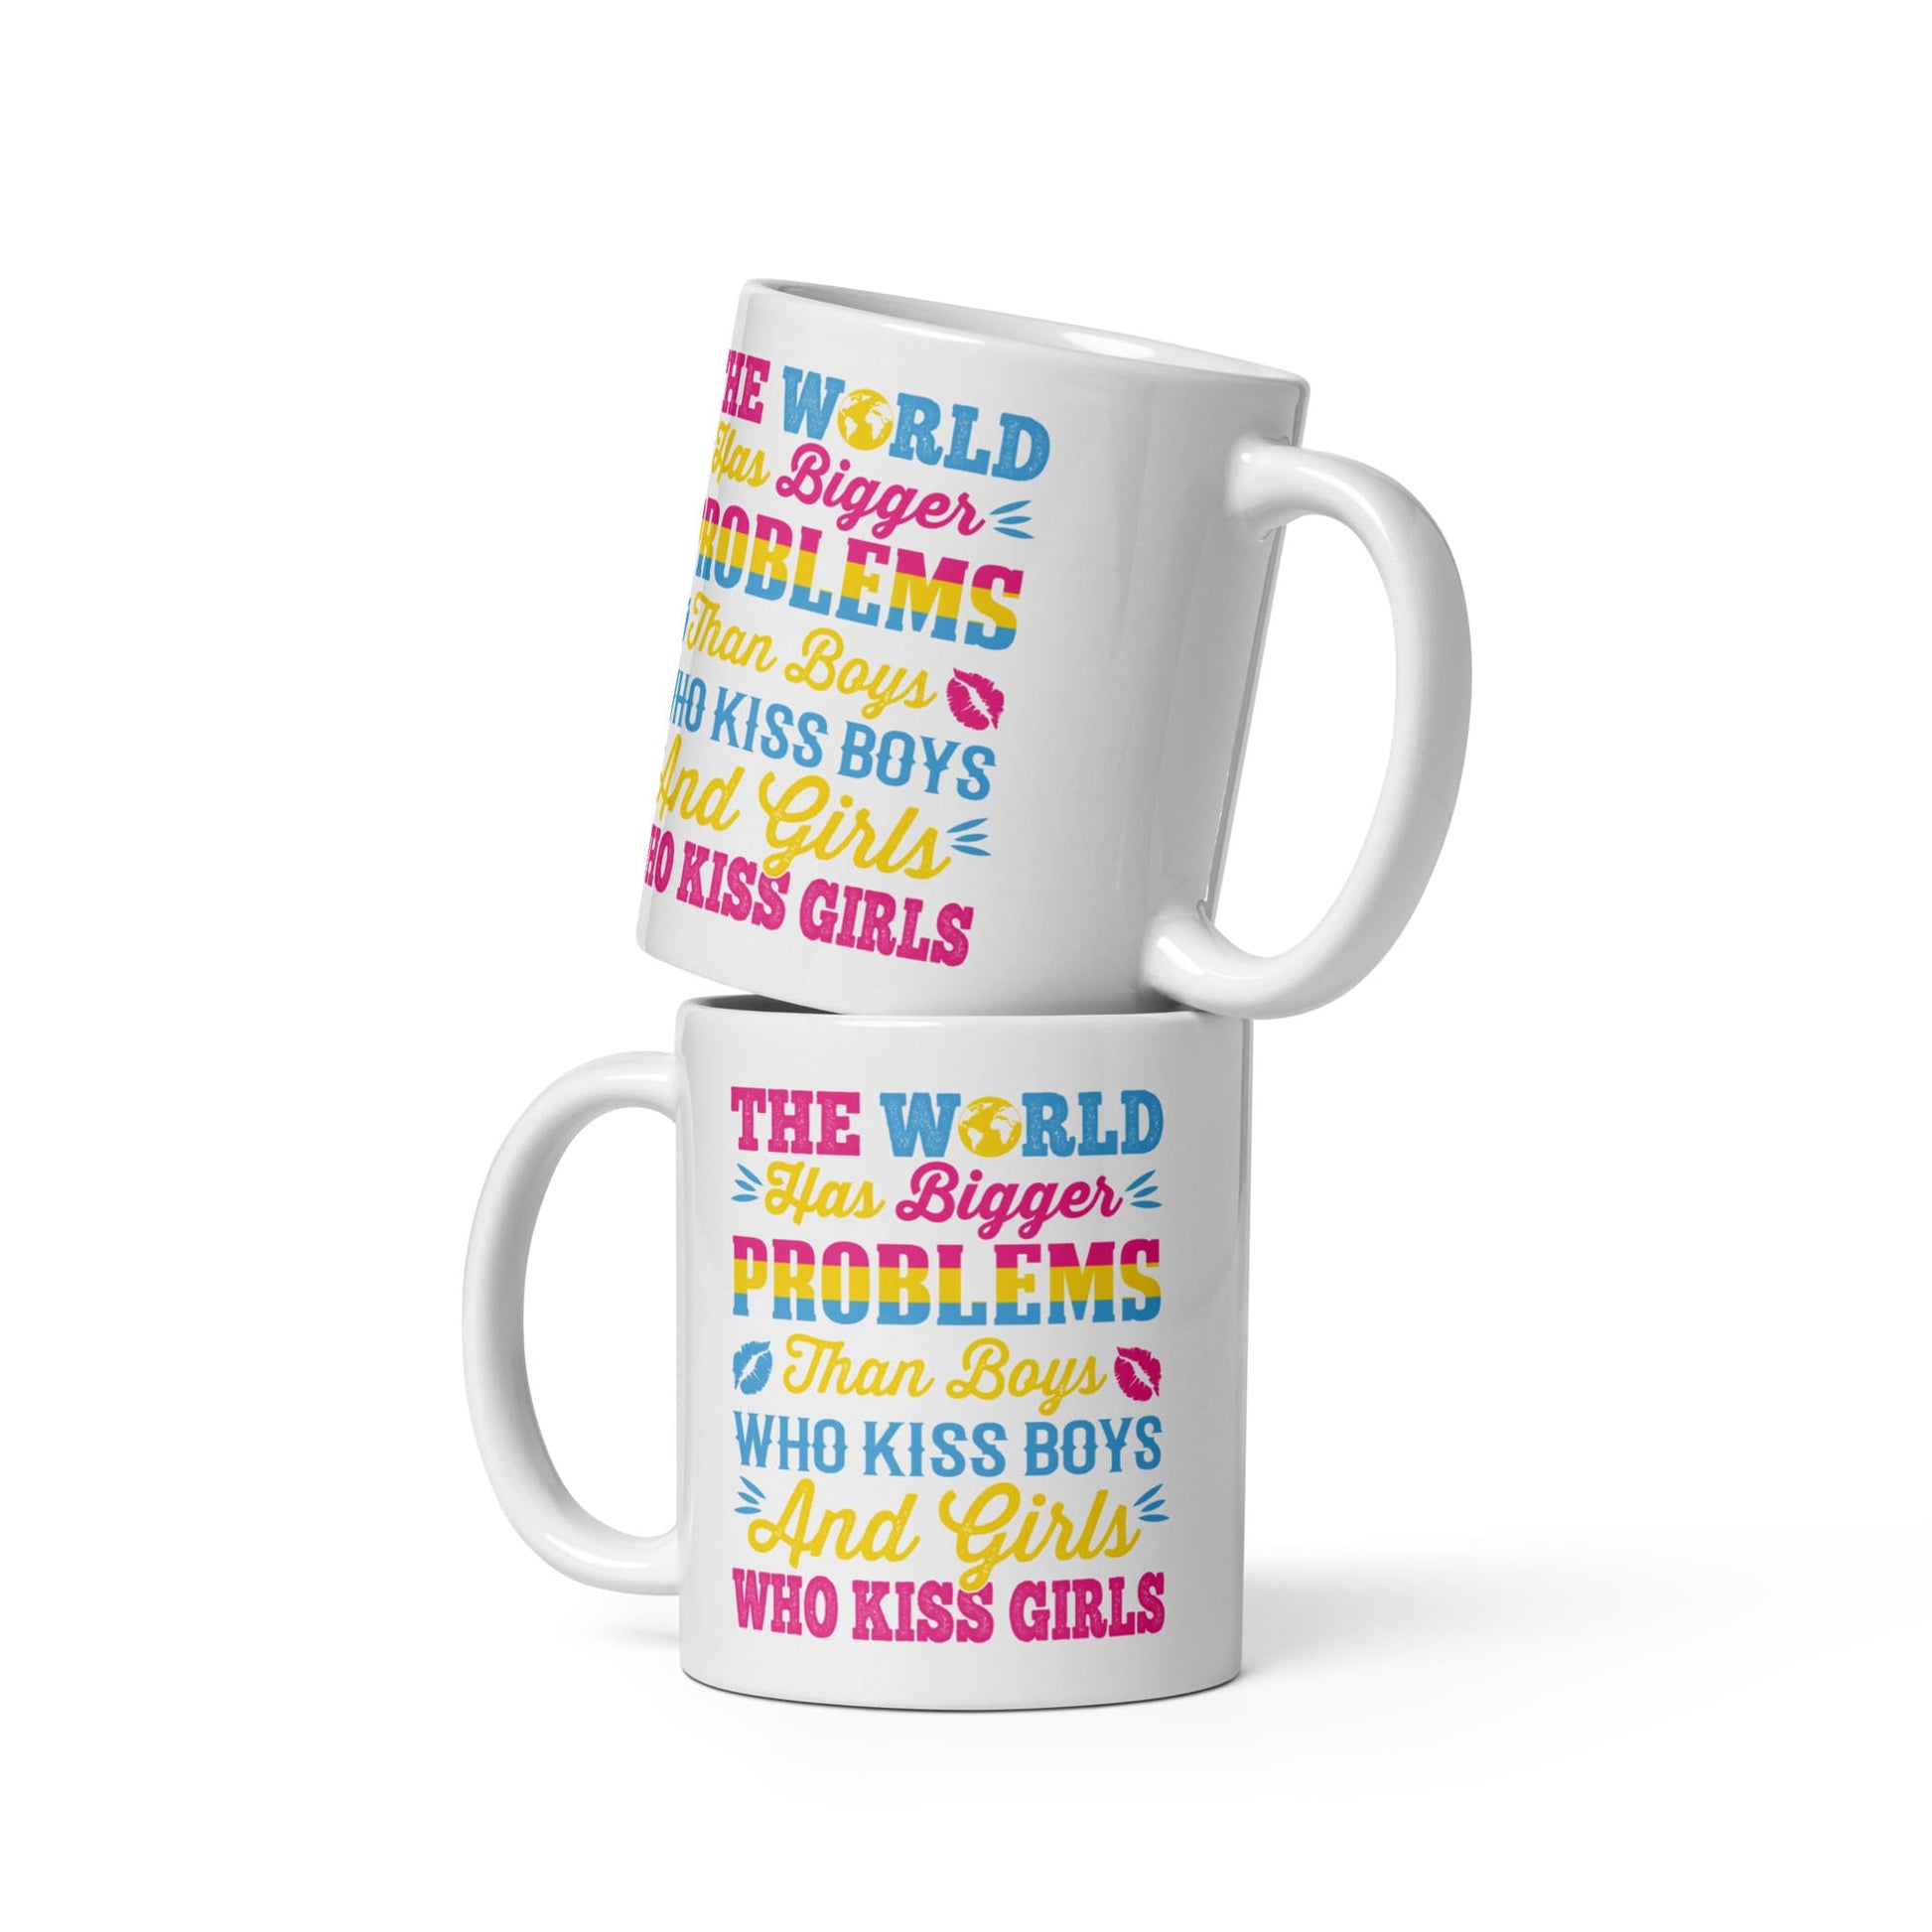 pansexual mug, statement pan pride coffee or tea cup both sides